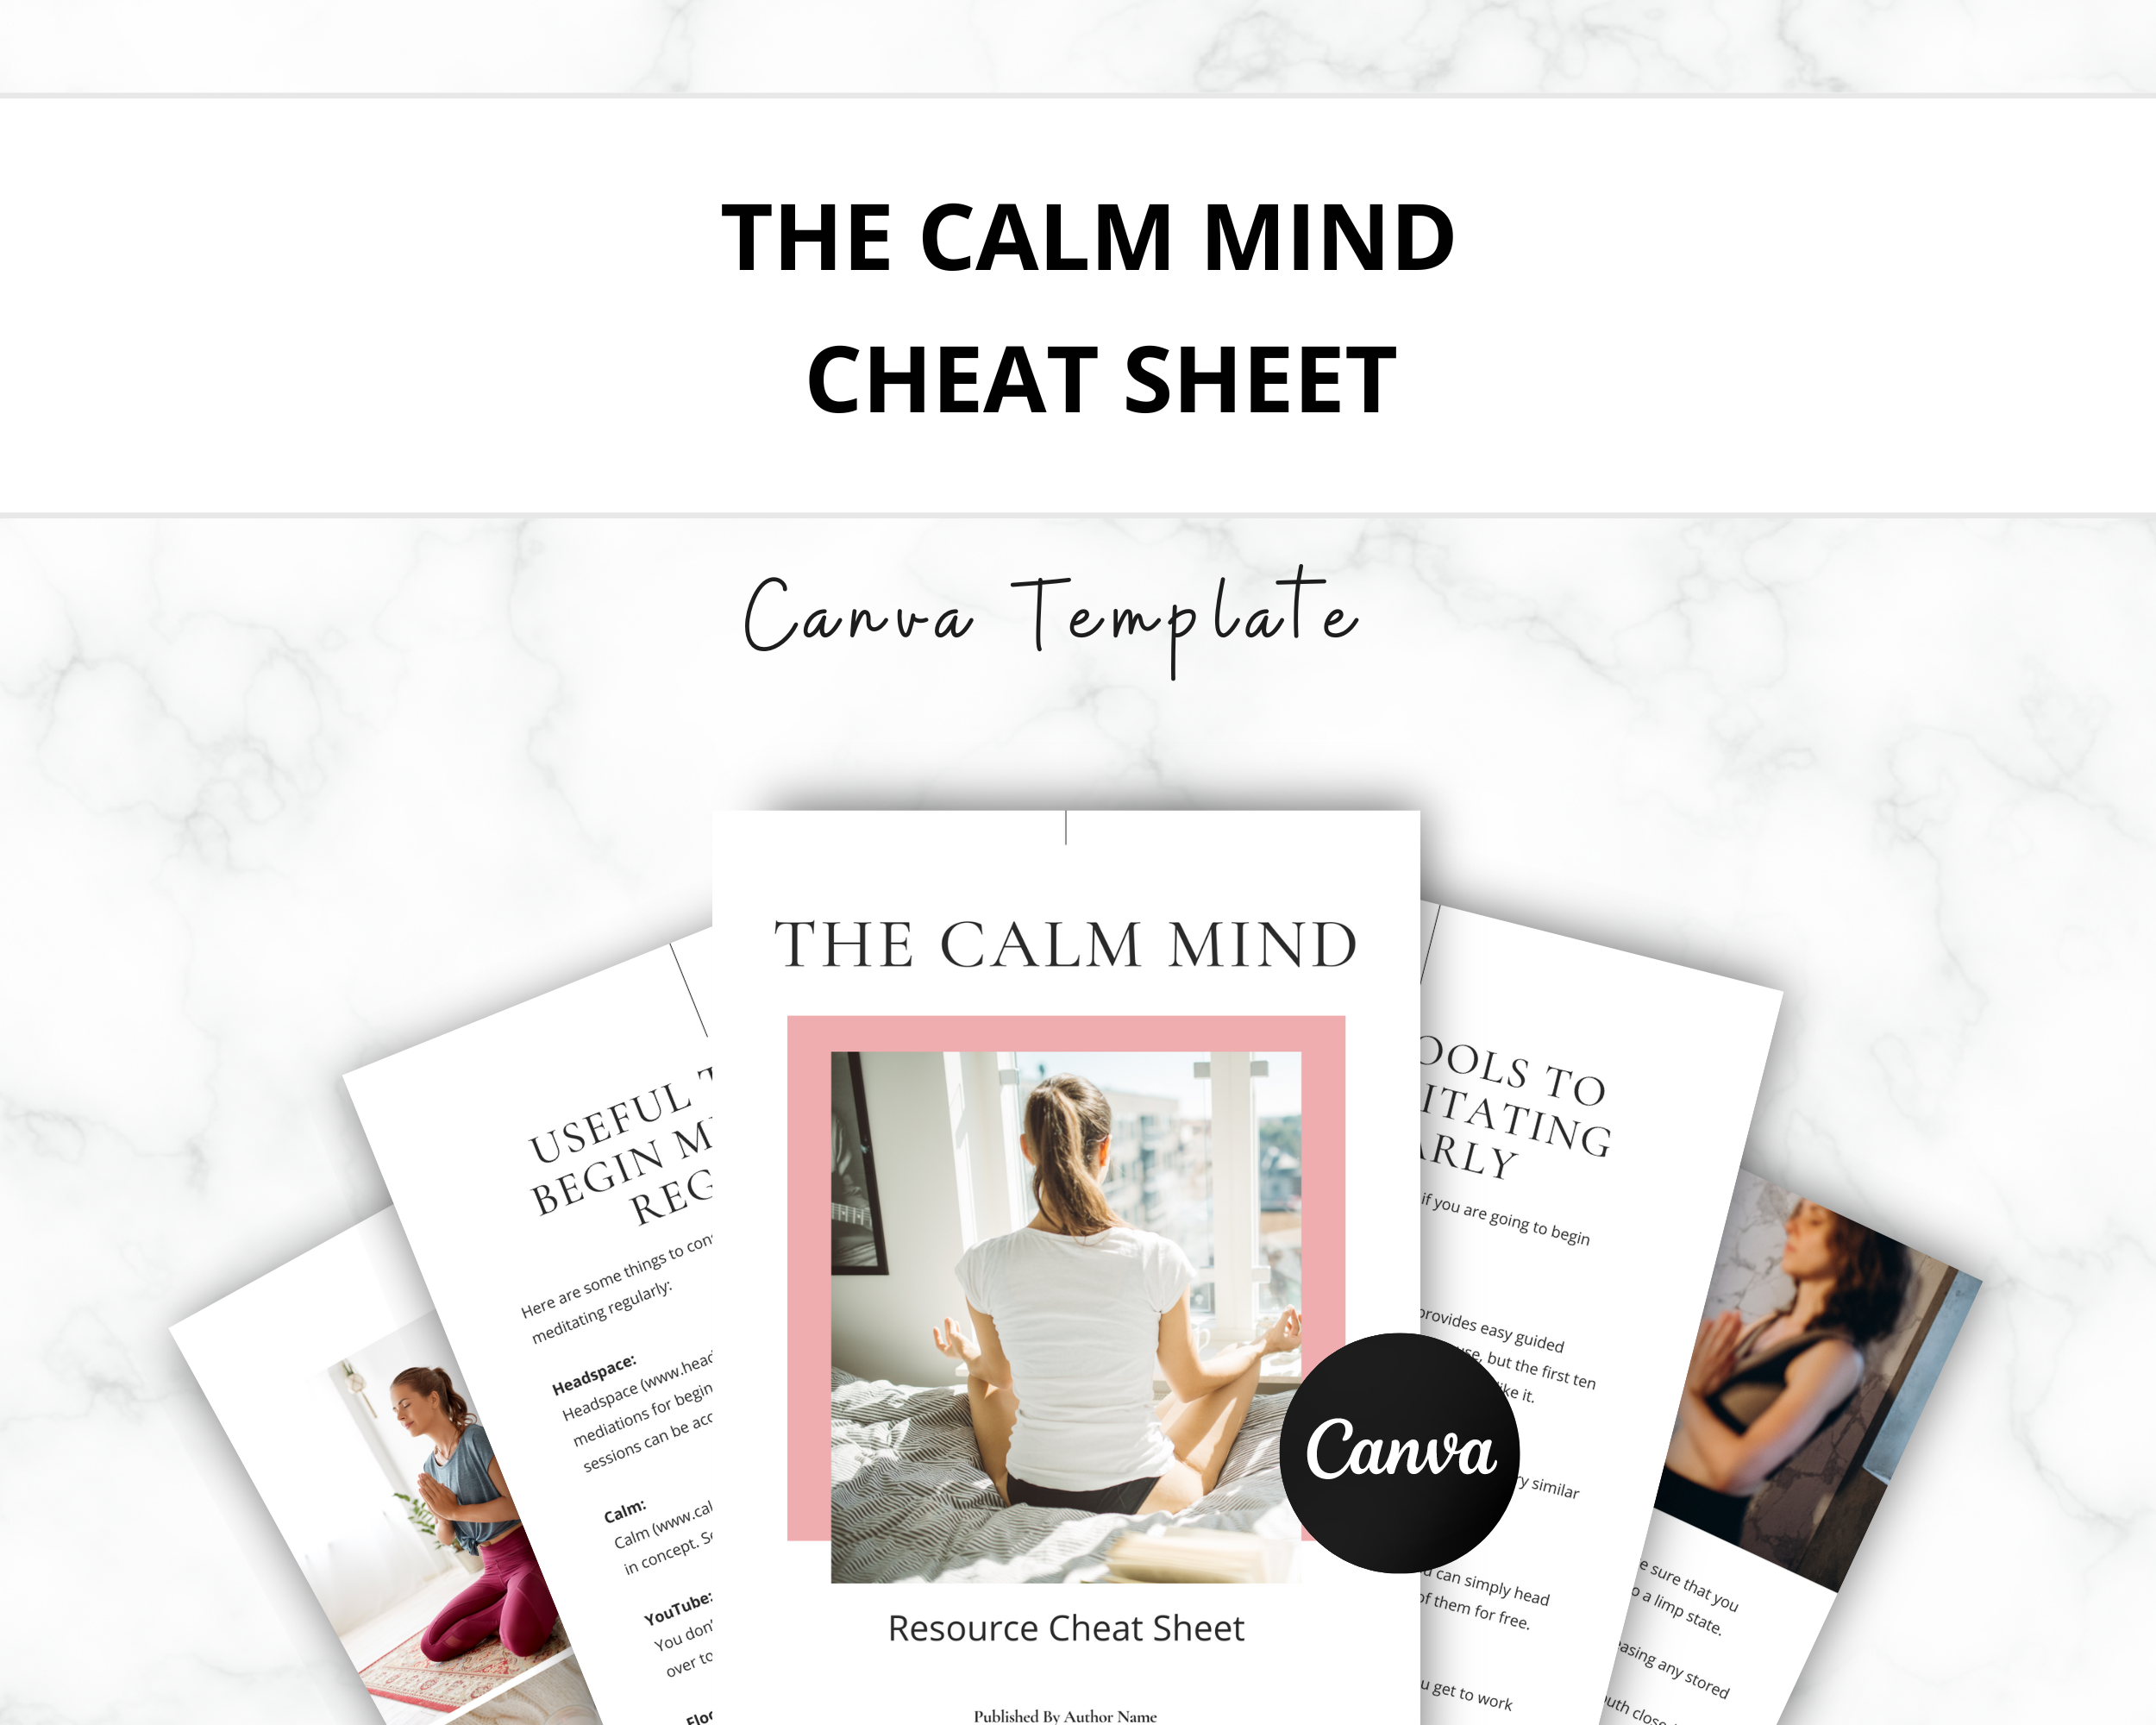 The Calm Mind Cheat Sheet